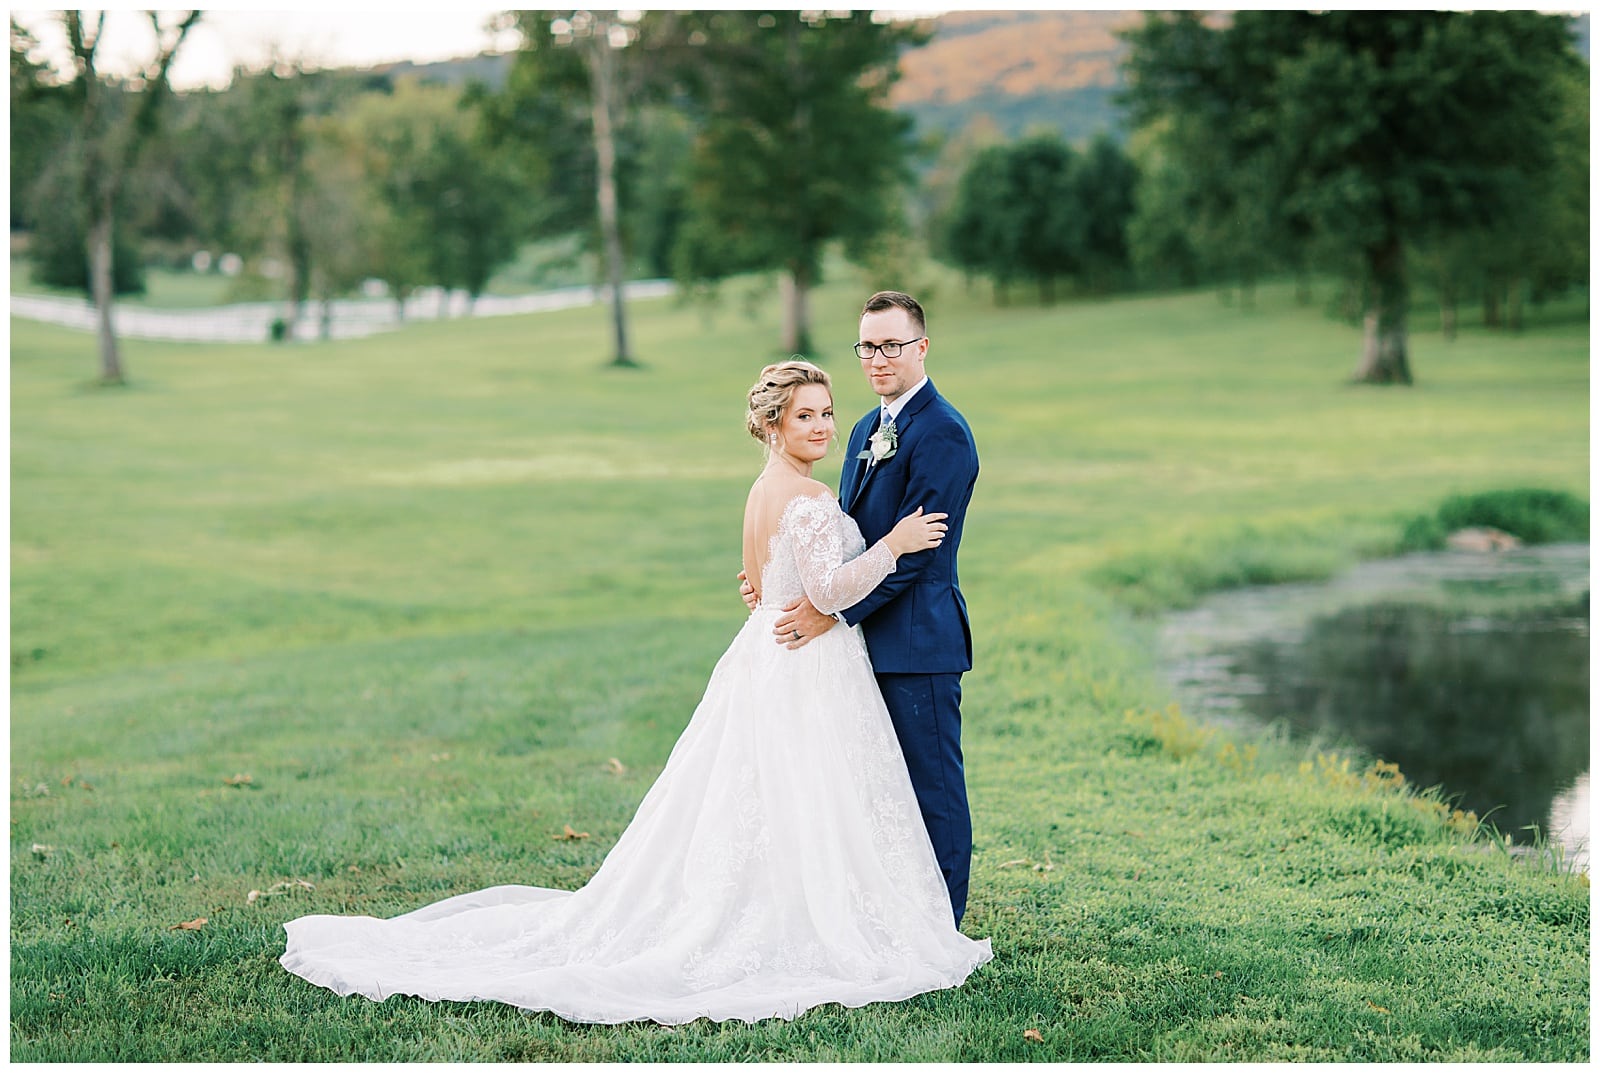 Danielle-Defayette-Photography-Castle-Hill-Cider-Charlottesville-Wedding-2020_0062.jpg